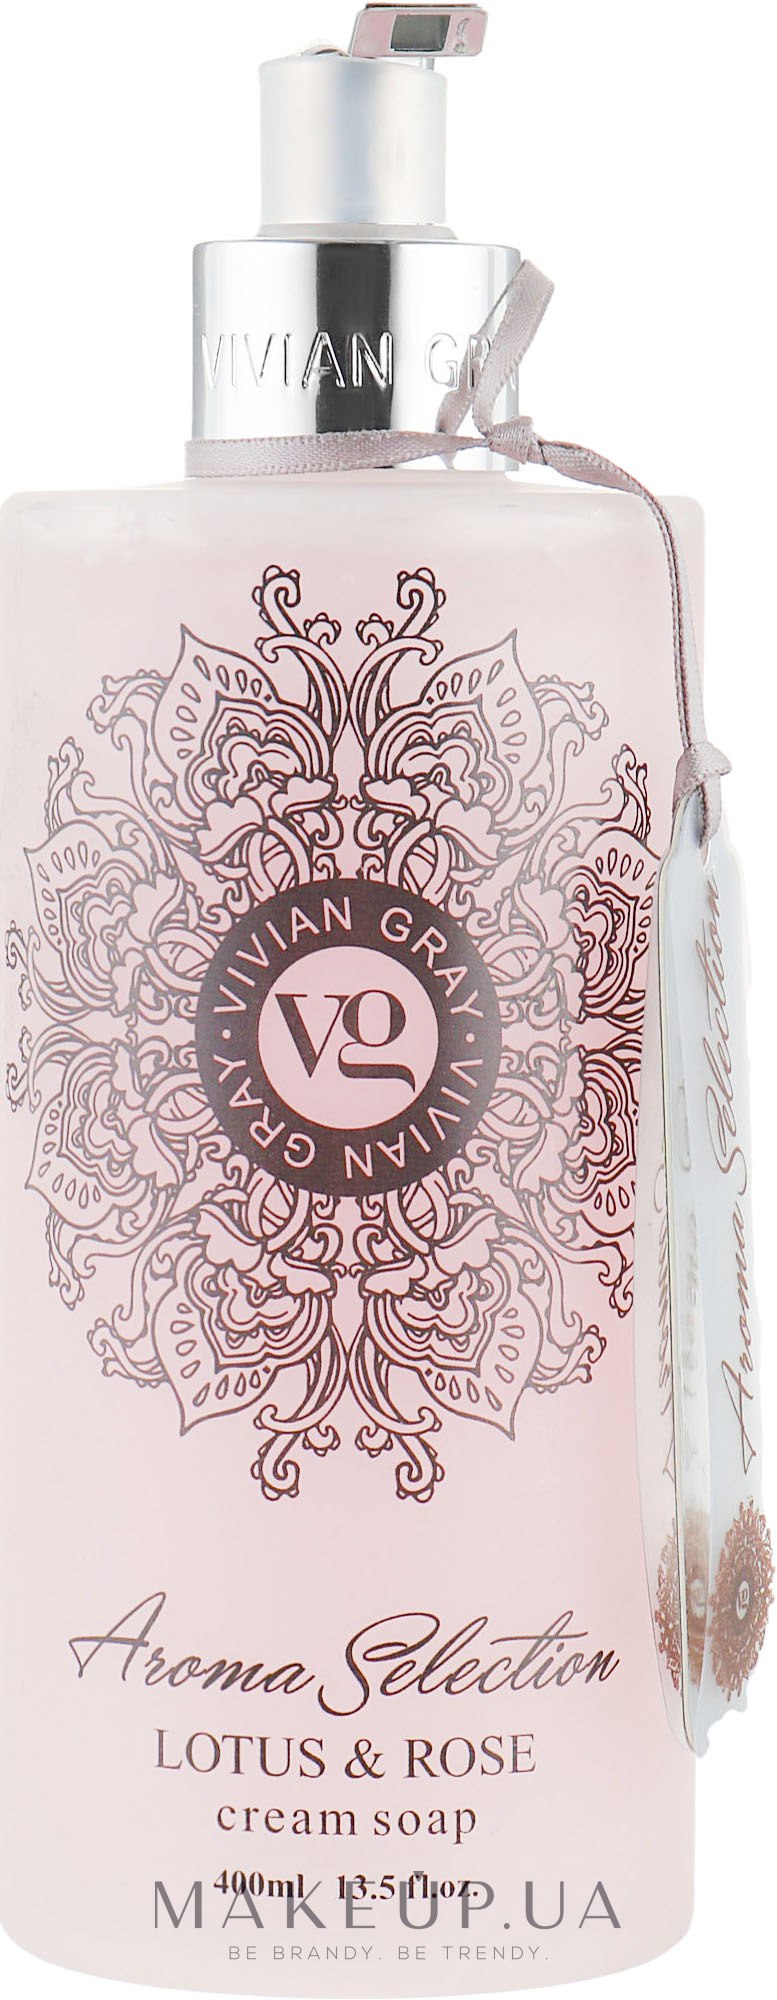 Жидкое крем-мыло - Vivian Gray Aroma Selection Lotus & Rose Cream Soap — фото 400ml